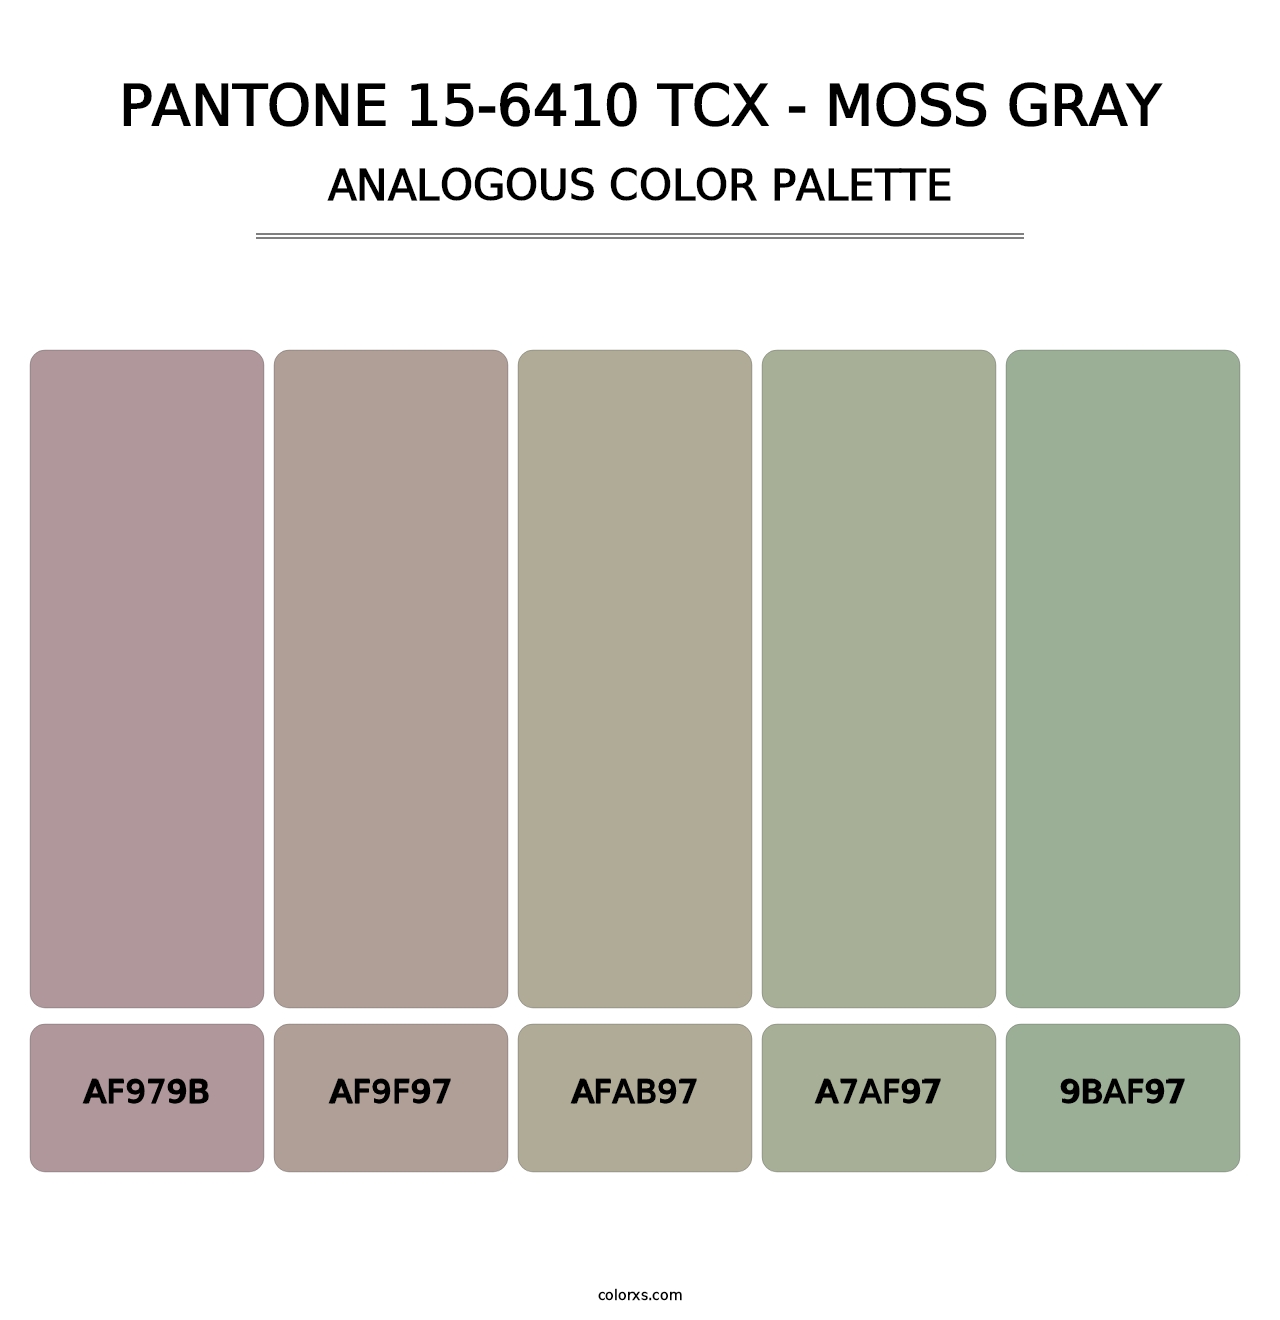 PANTONE 15-6410 TCX - Moss Gray - Analogous Color Palette